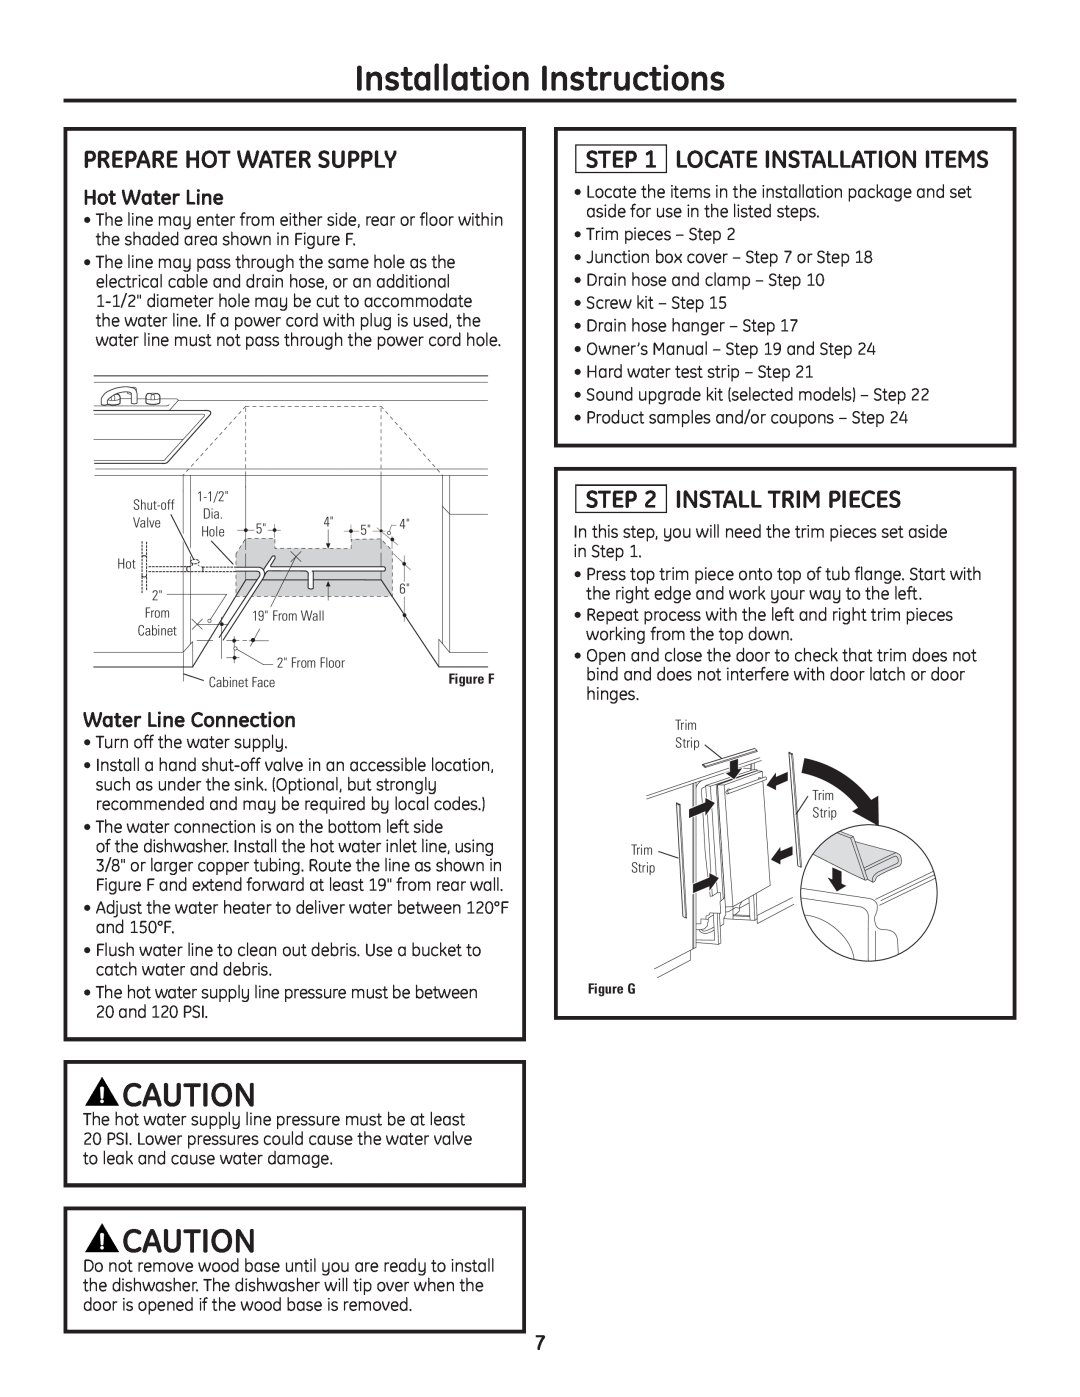 GE Monogram Built-In Dishwashers Installation Instructions, Prepare Hot Water Supply, Locate Installation Items 